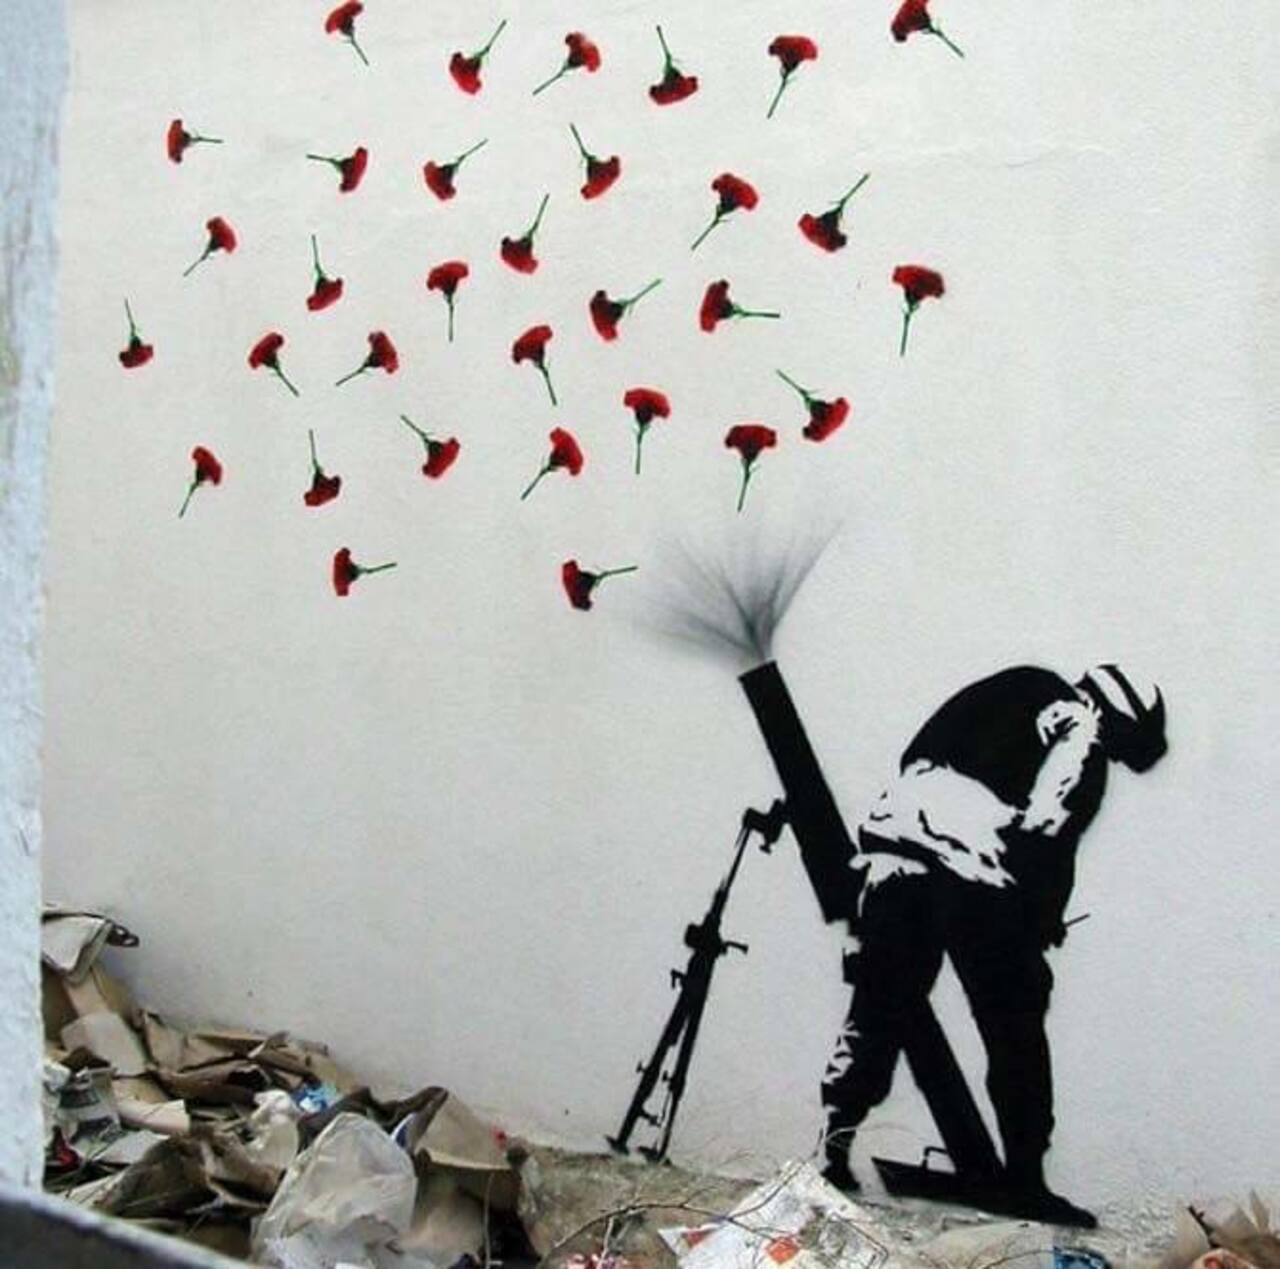 FLOWER BOMBS – #Creative #Streetart | Be ▲rtist - Be ▲rt https://beartistbeart.com/2016/08/17/flower-bombs-creative-streetart/?utm_campaign=crowdfire&utm_content=crowdfire&utm_medium=social&utm_source=twitter https://t.co/xYVrhlT6bS